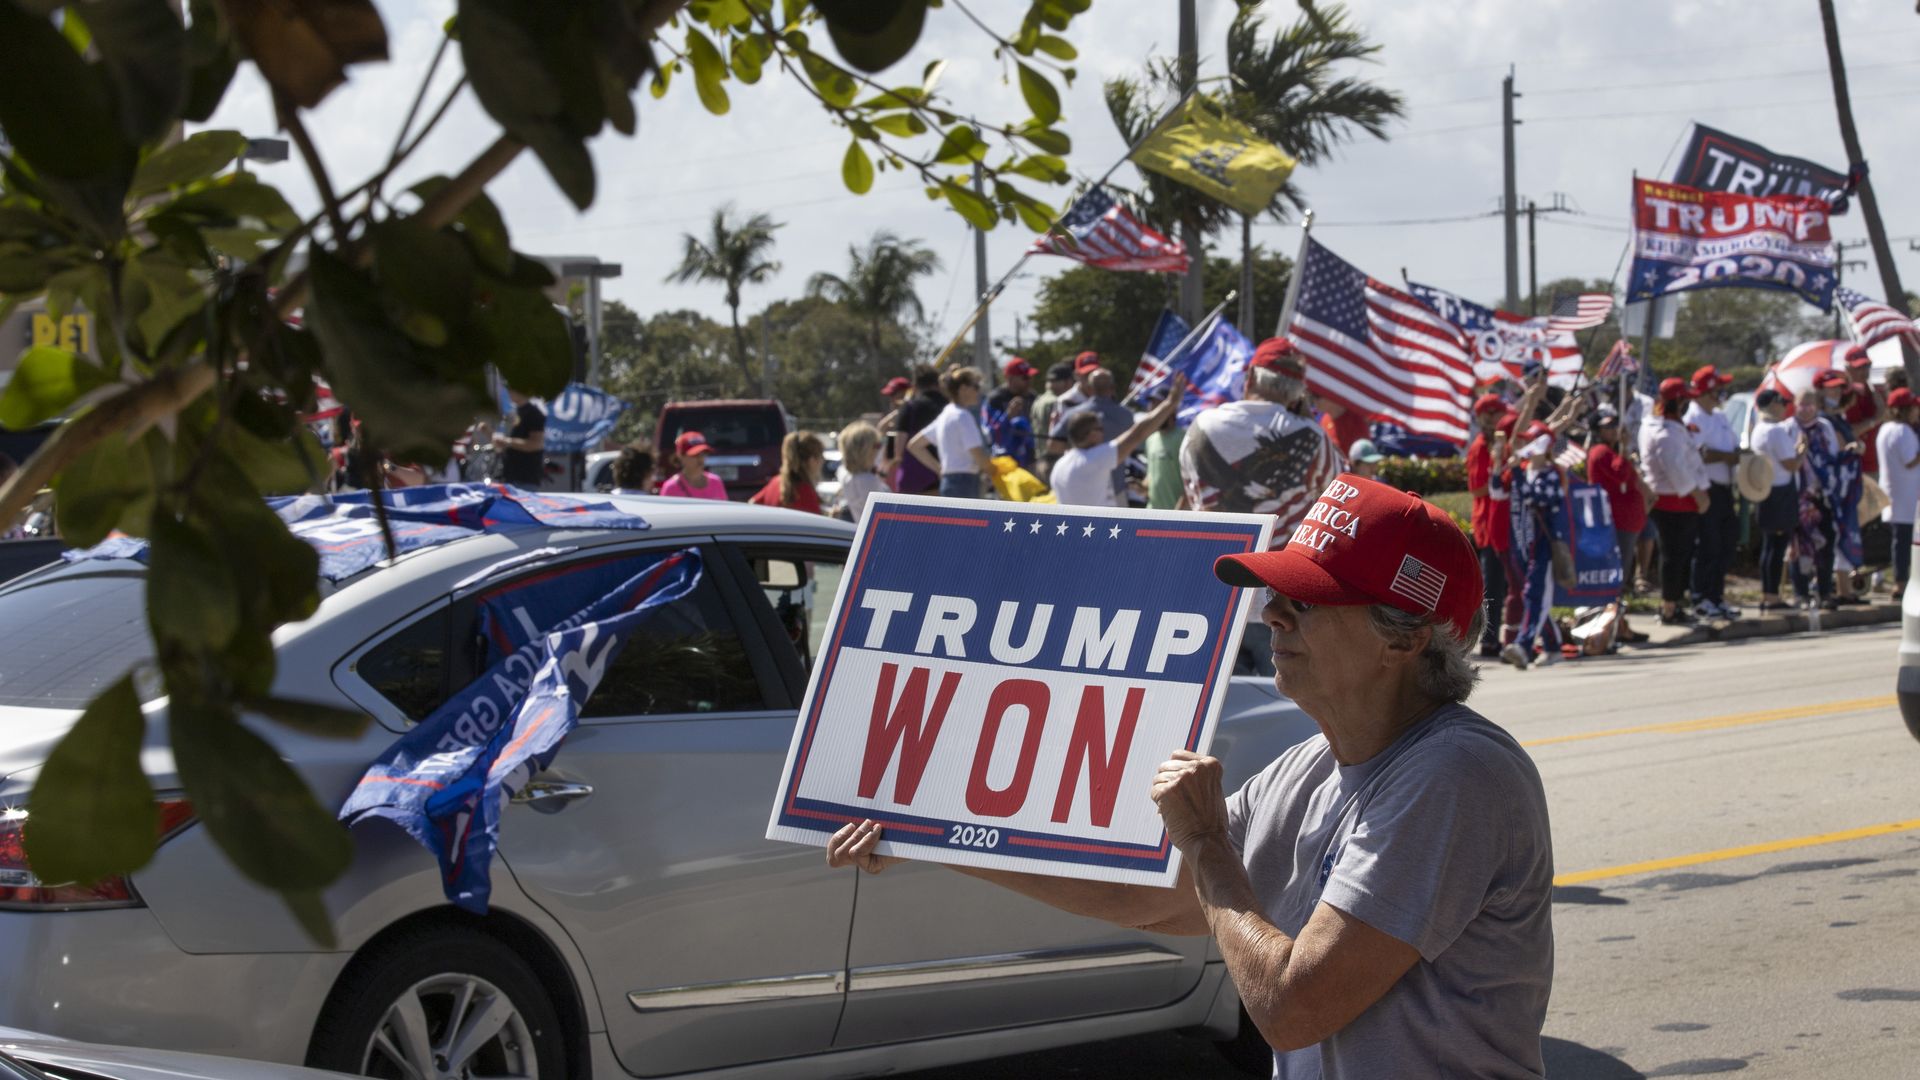 Woman holding "Trump won" sign